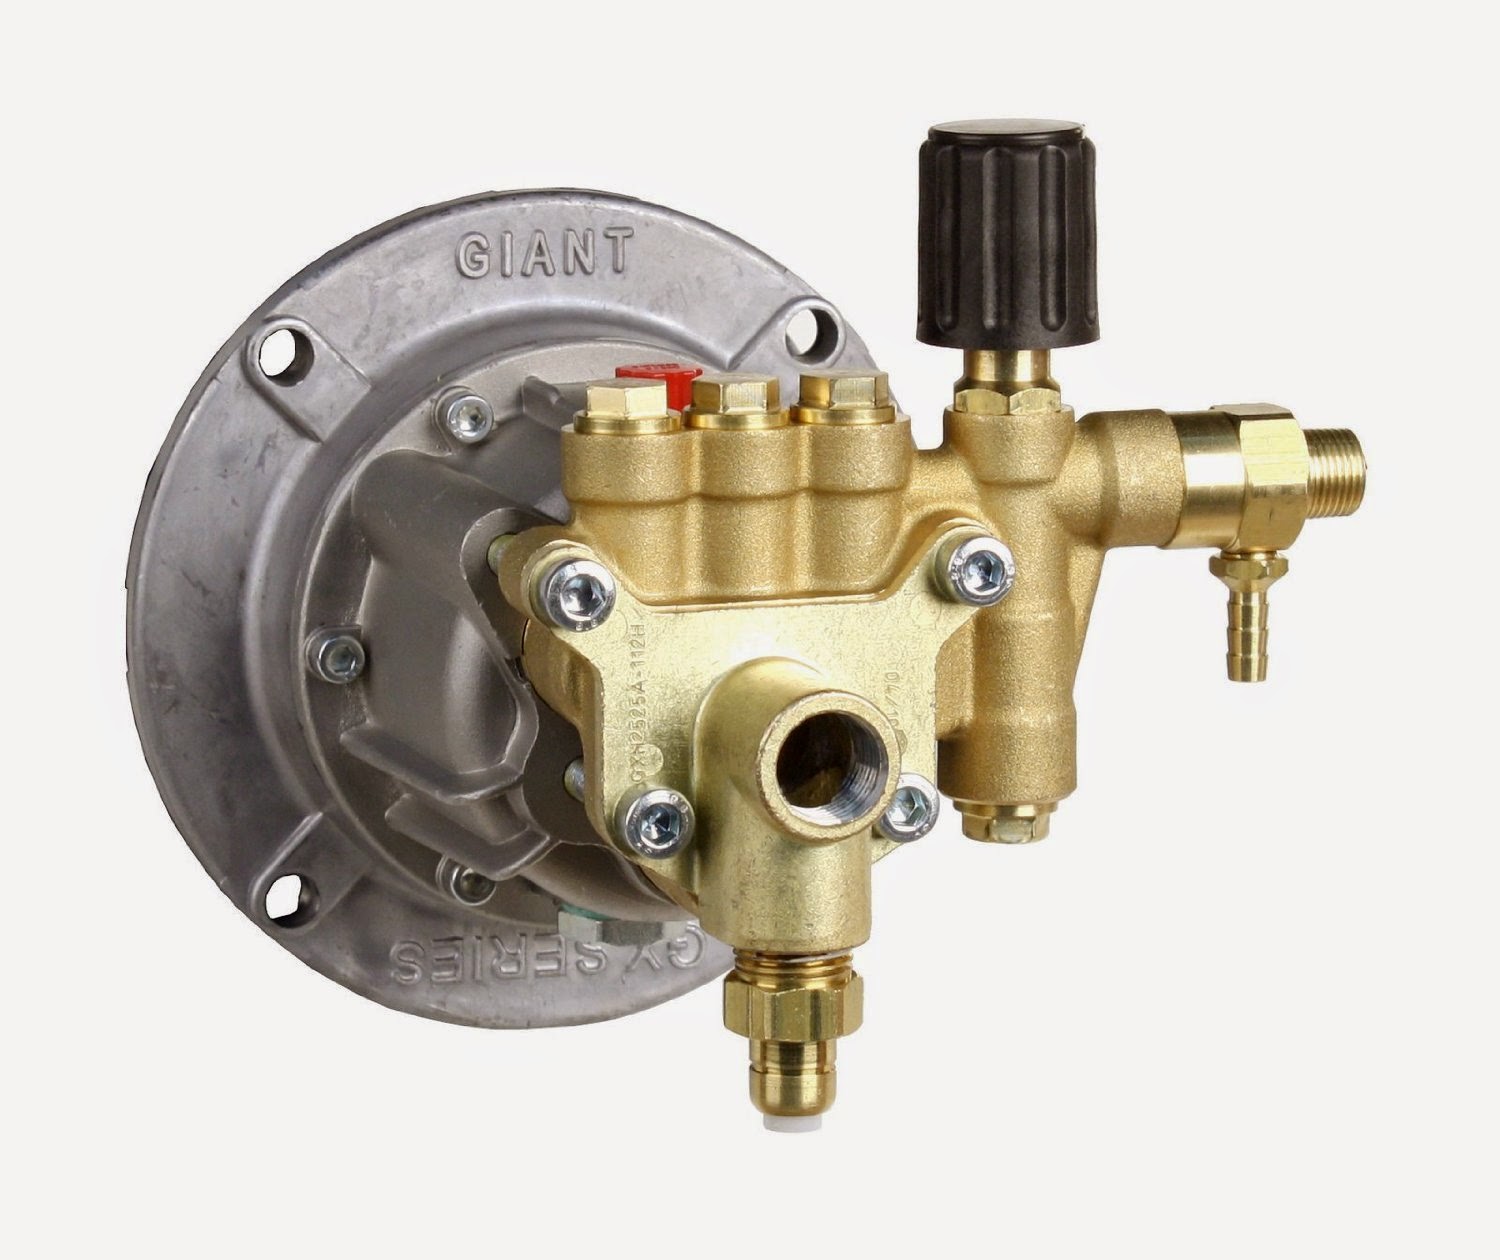 honda pressure washer parts: honda excell pressure washer parts